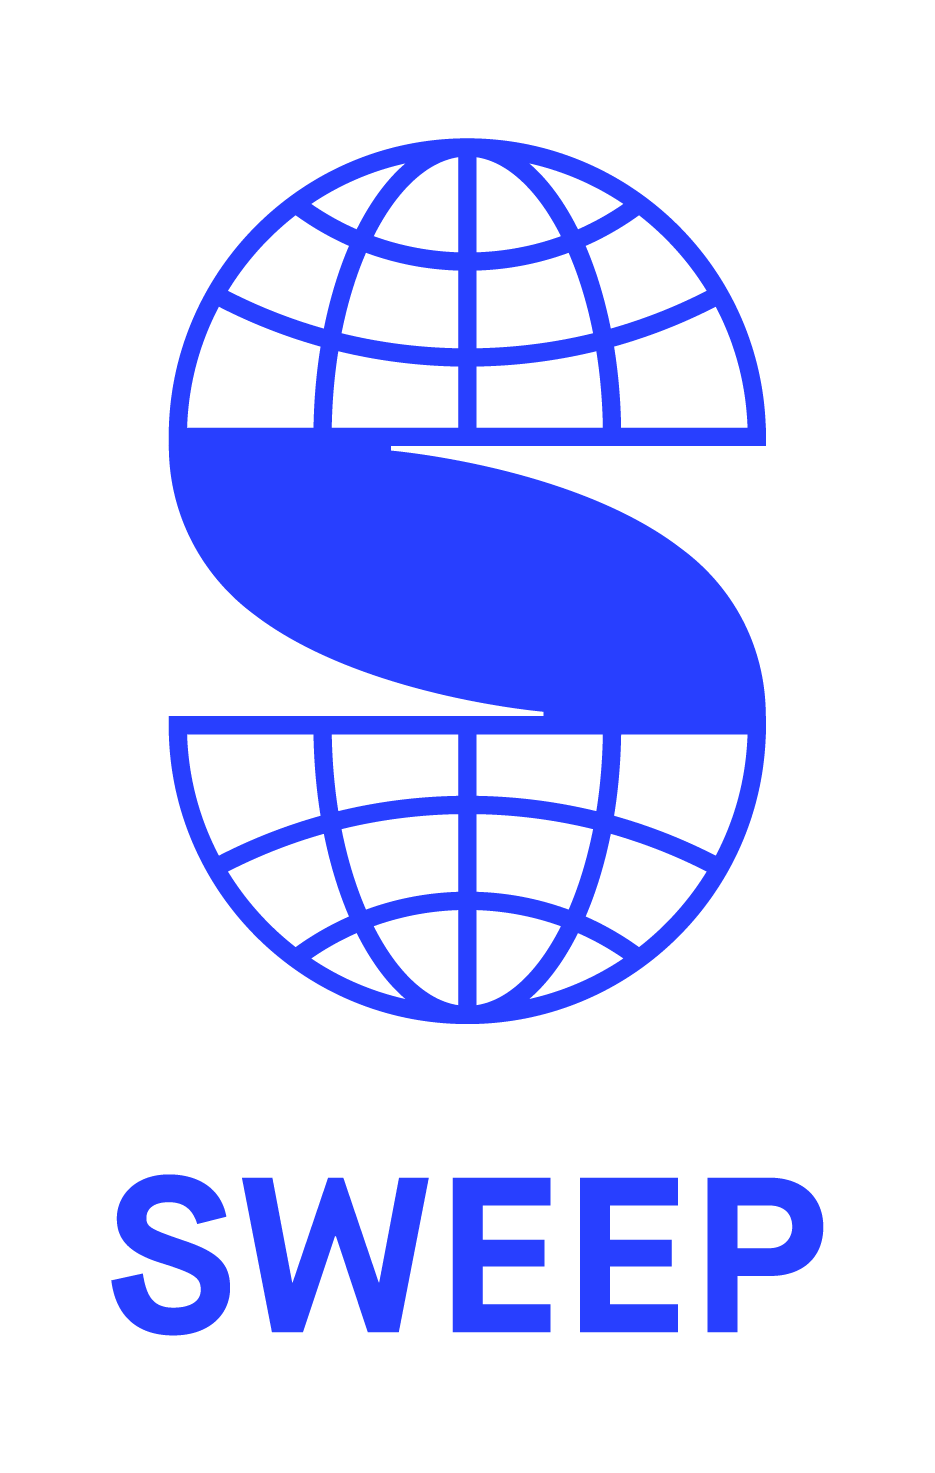 logo SWEEP - coorganisateur de la keynote finance.png